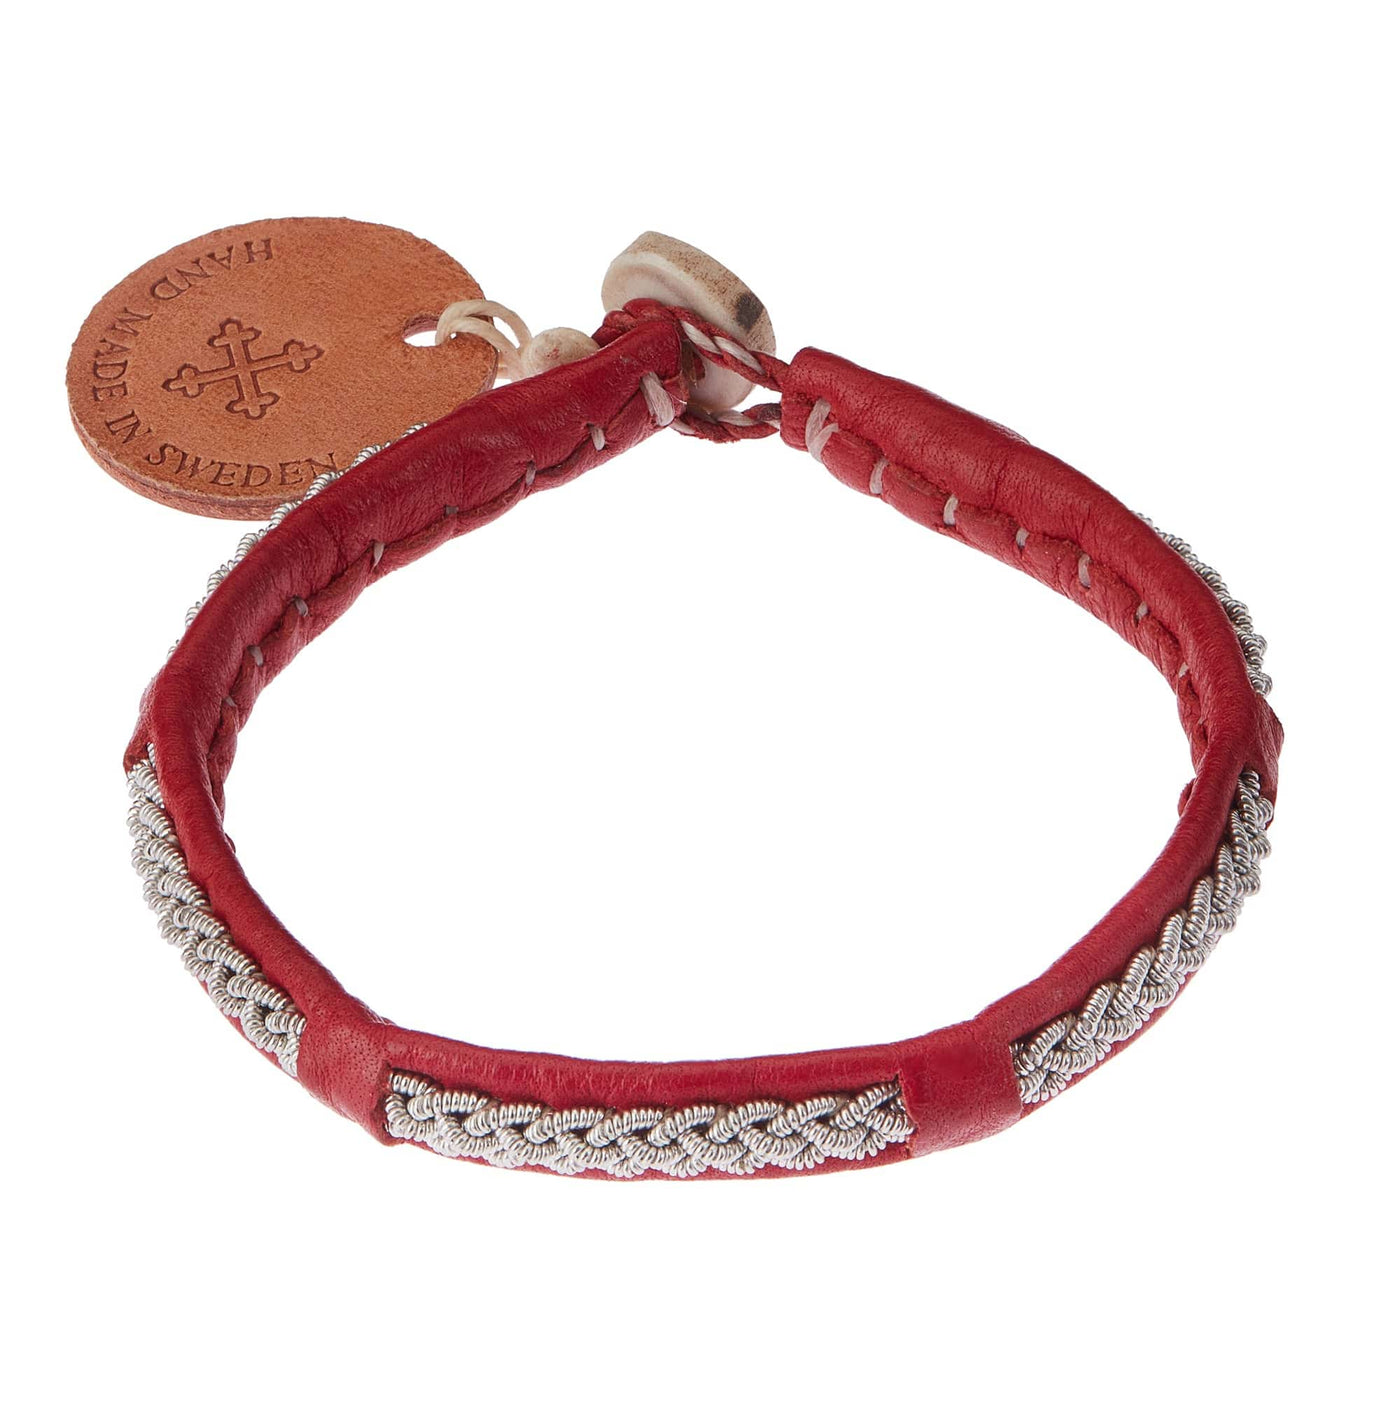 Red Leather & Pewter Bracelet - Maria Rudman - Ileana Makri store